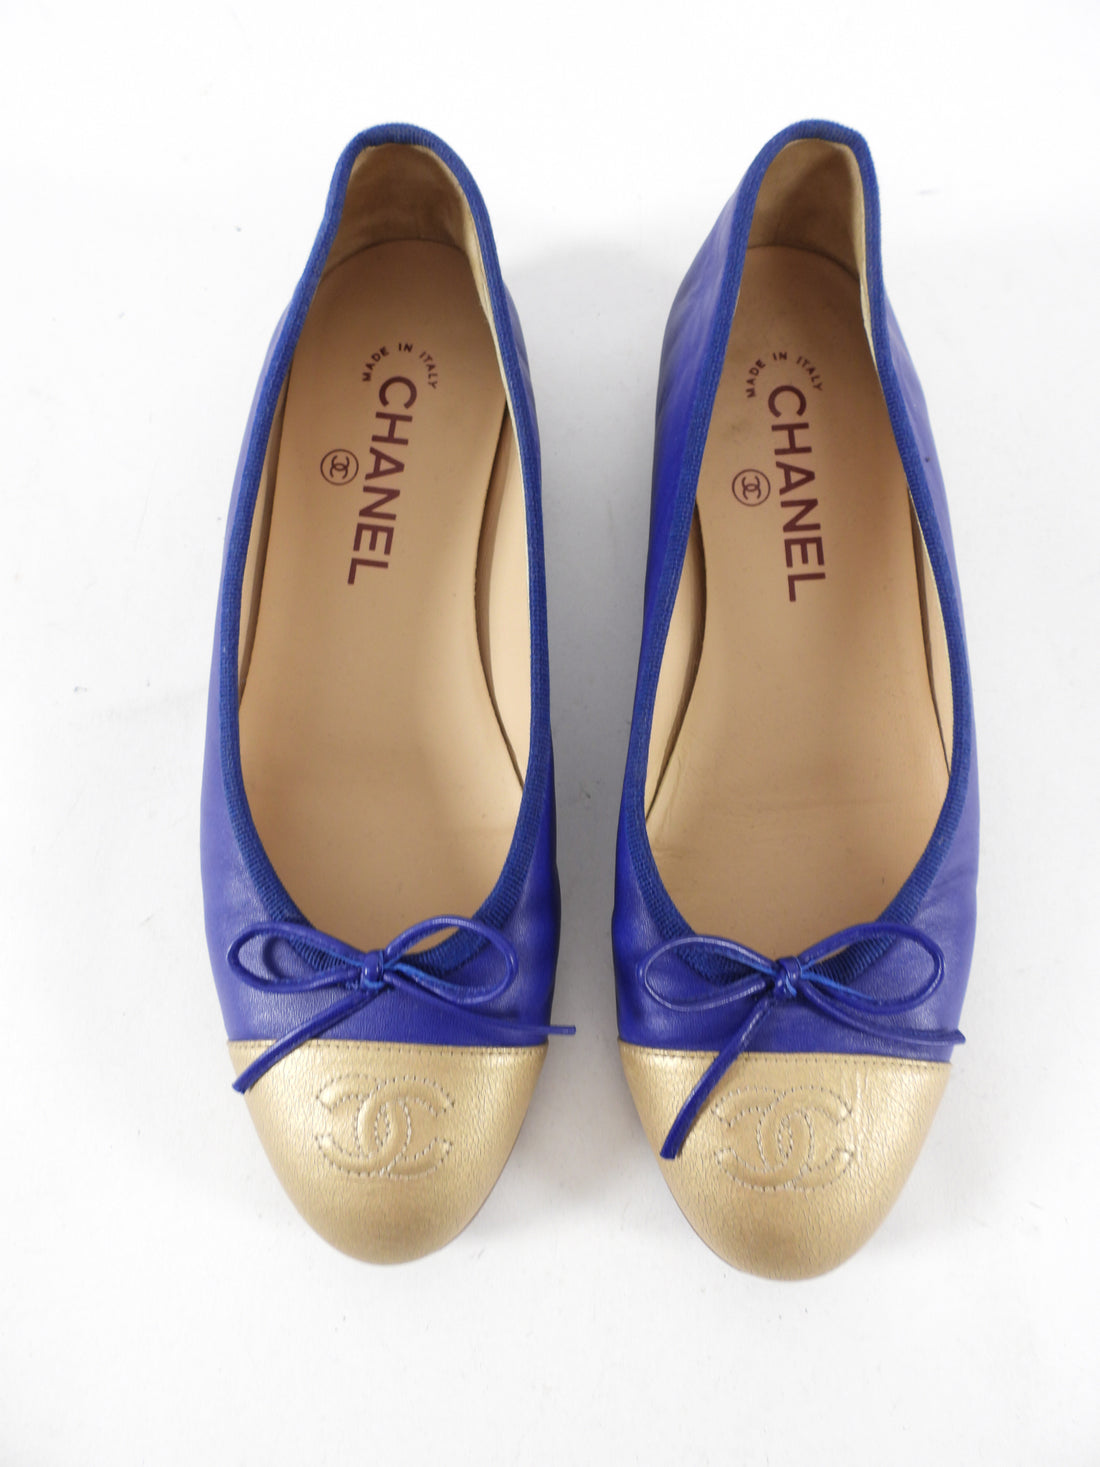 Chanel Cobalt Blue and Gold Cap toe Ballet Flat Shoes - 37